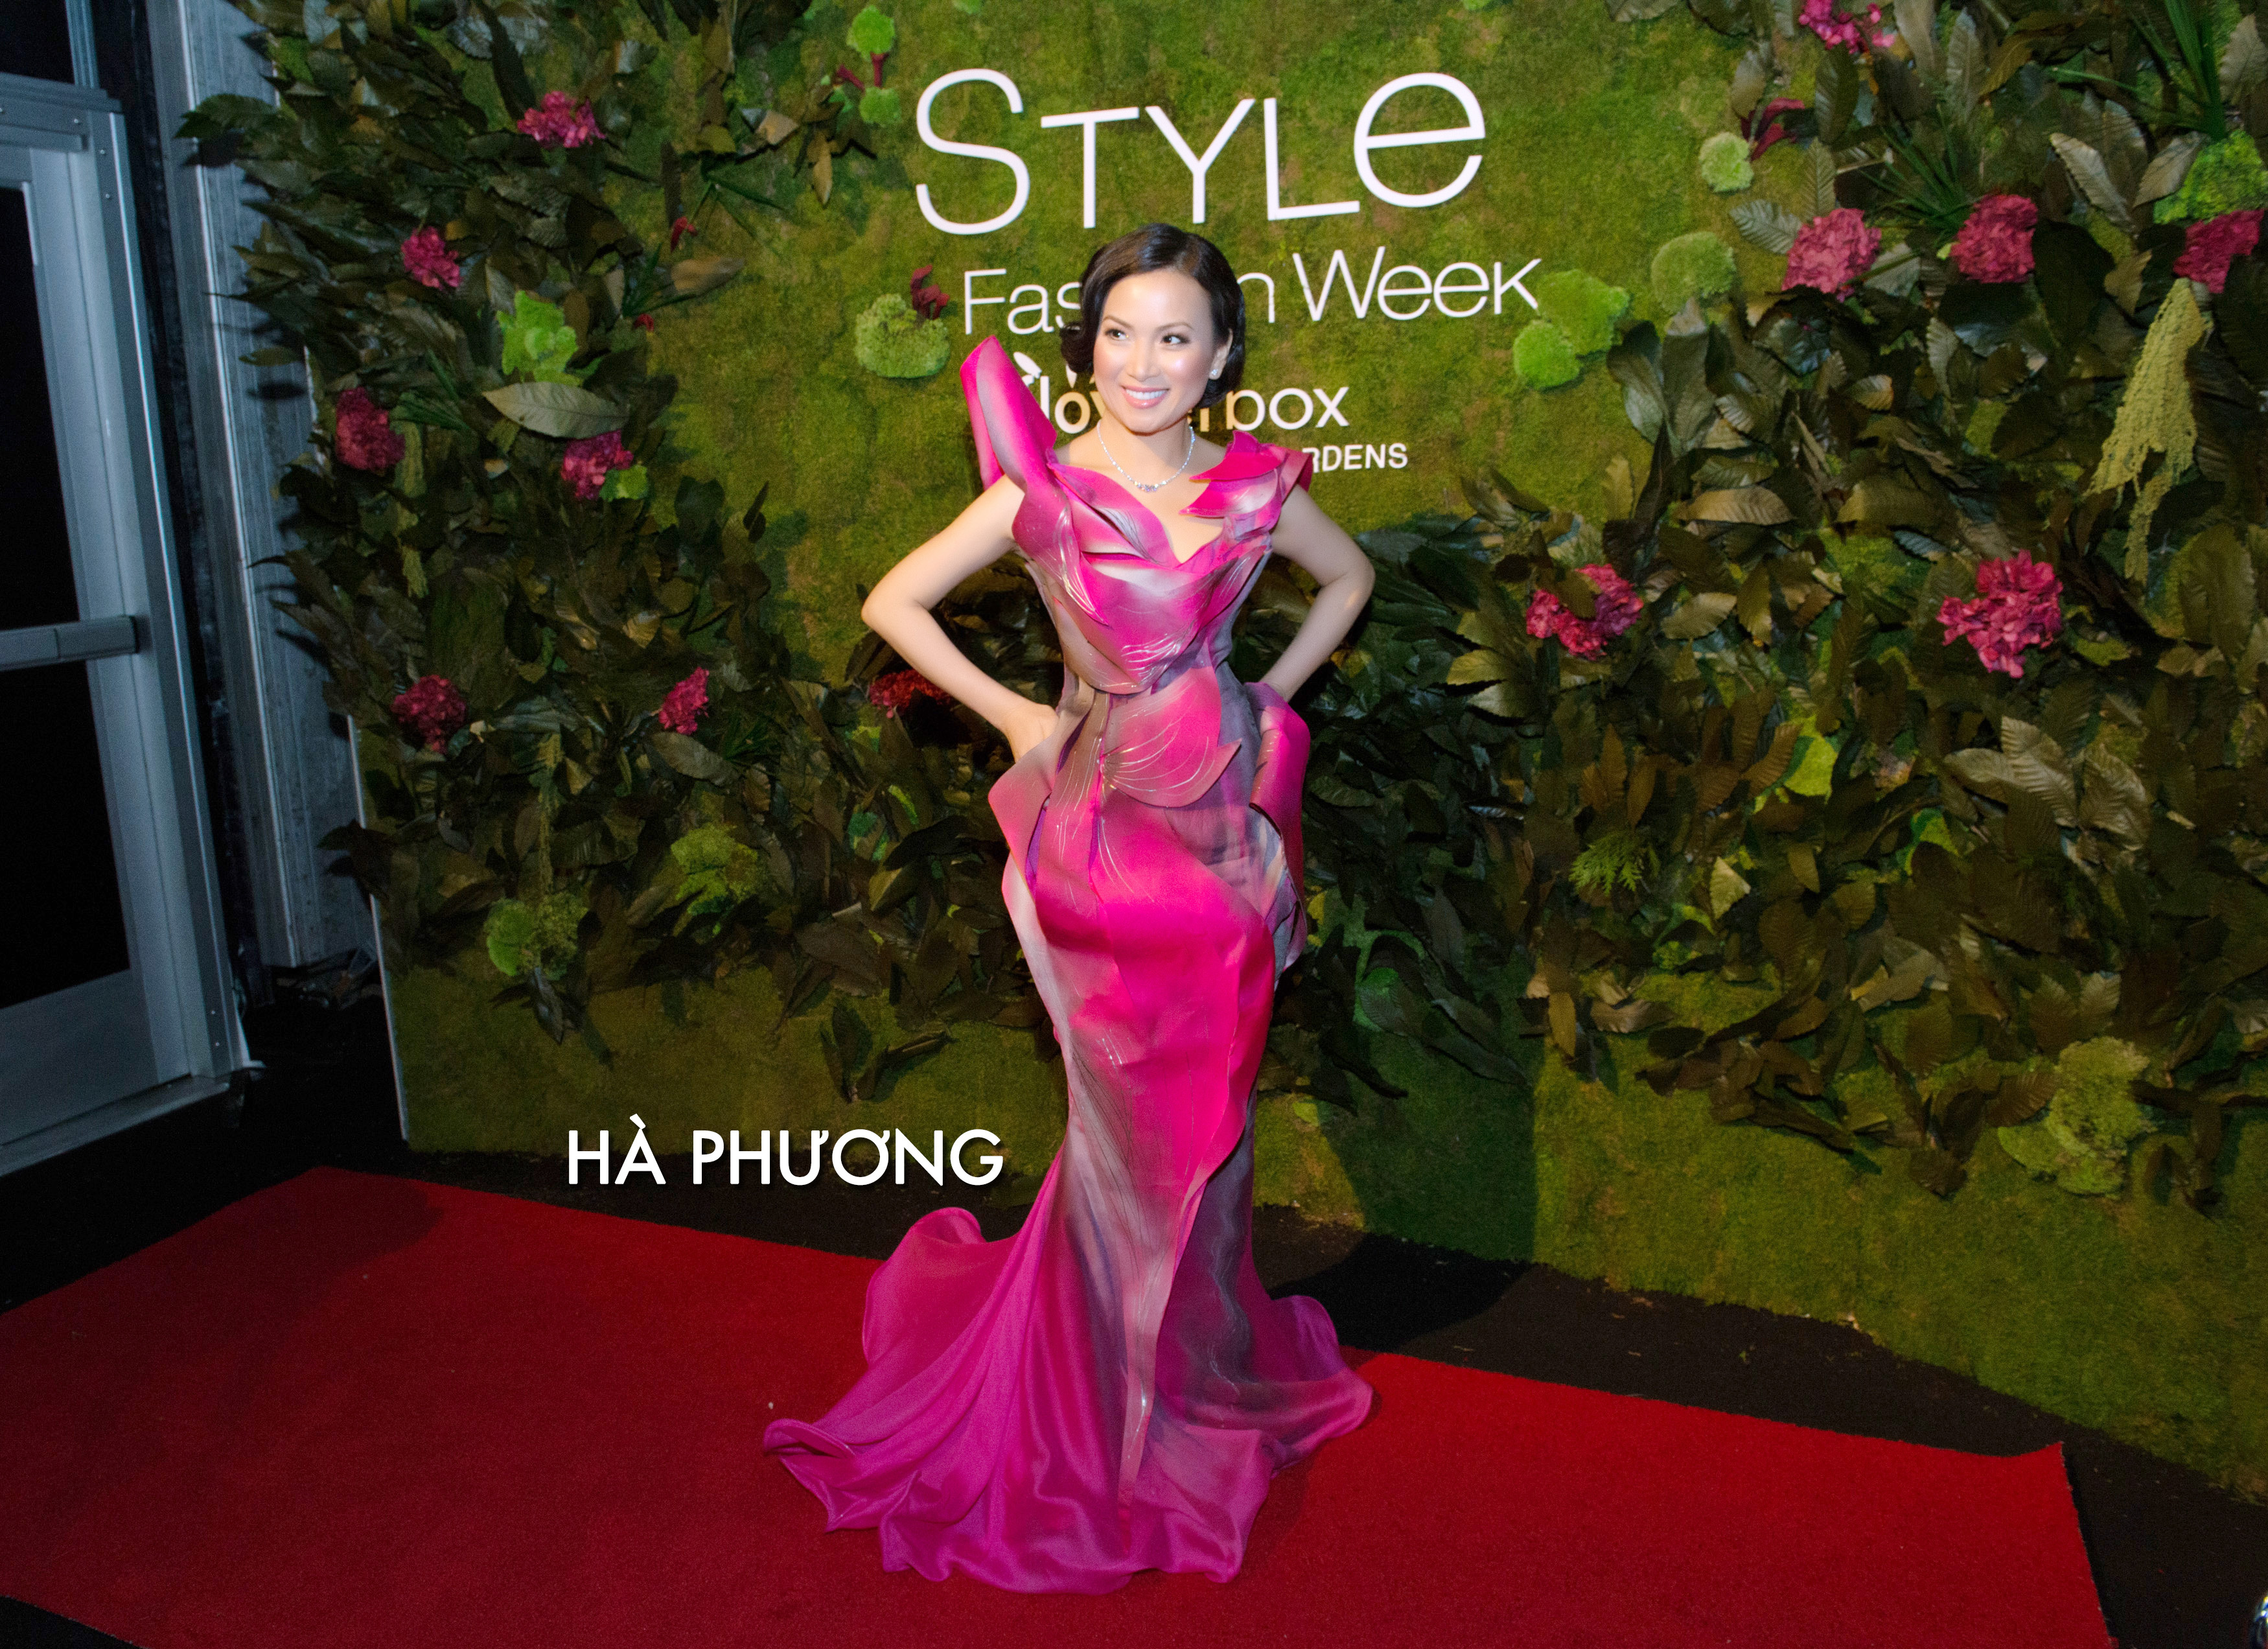 Ha Phuong at New York Fashion week 2015. http://thegioicasi.com/the-gioi-ca-si/ha-phuong-du-show-quynh-paris-o-new-york/ www.haphuongworld.com www.haphuong.global haphuongfange